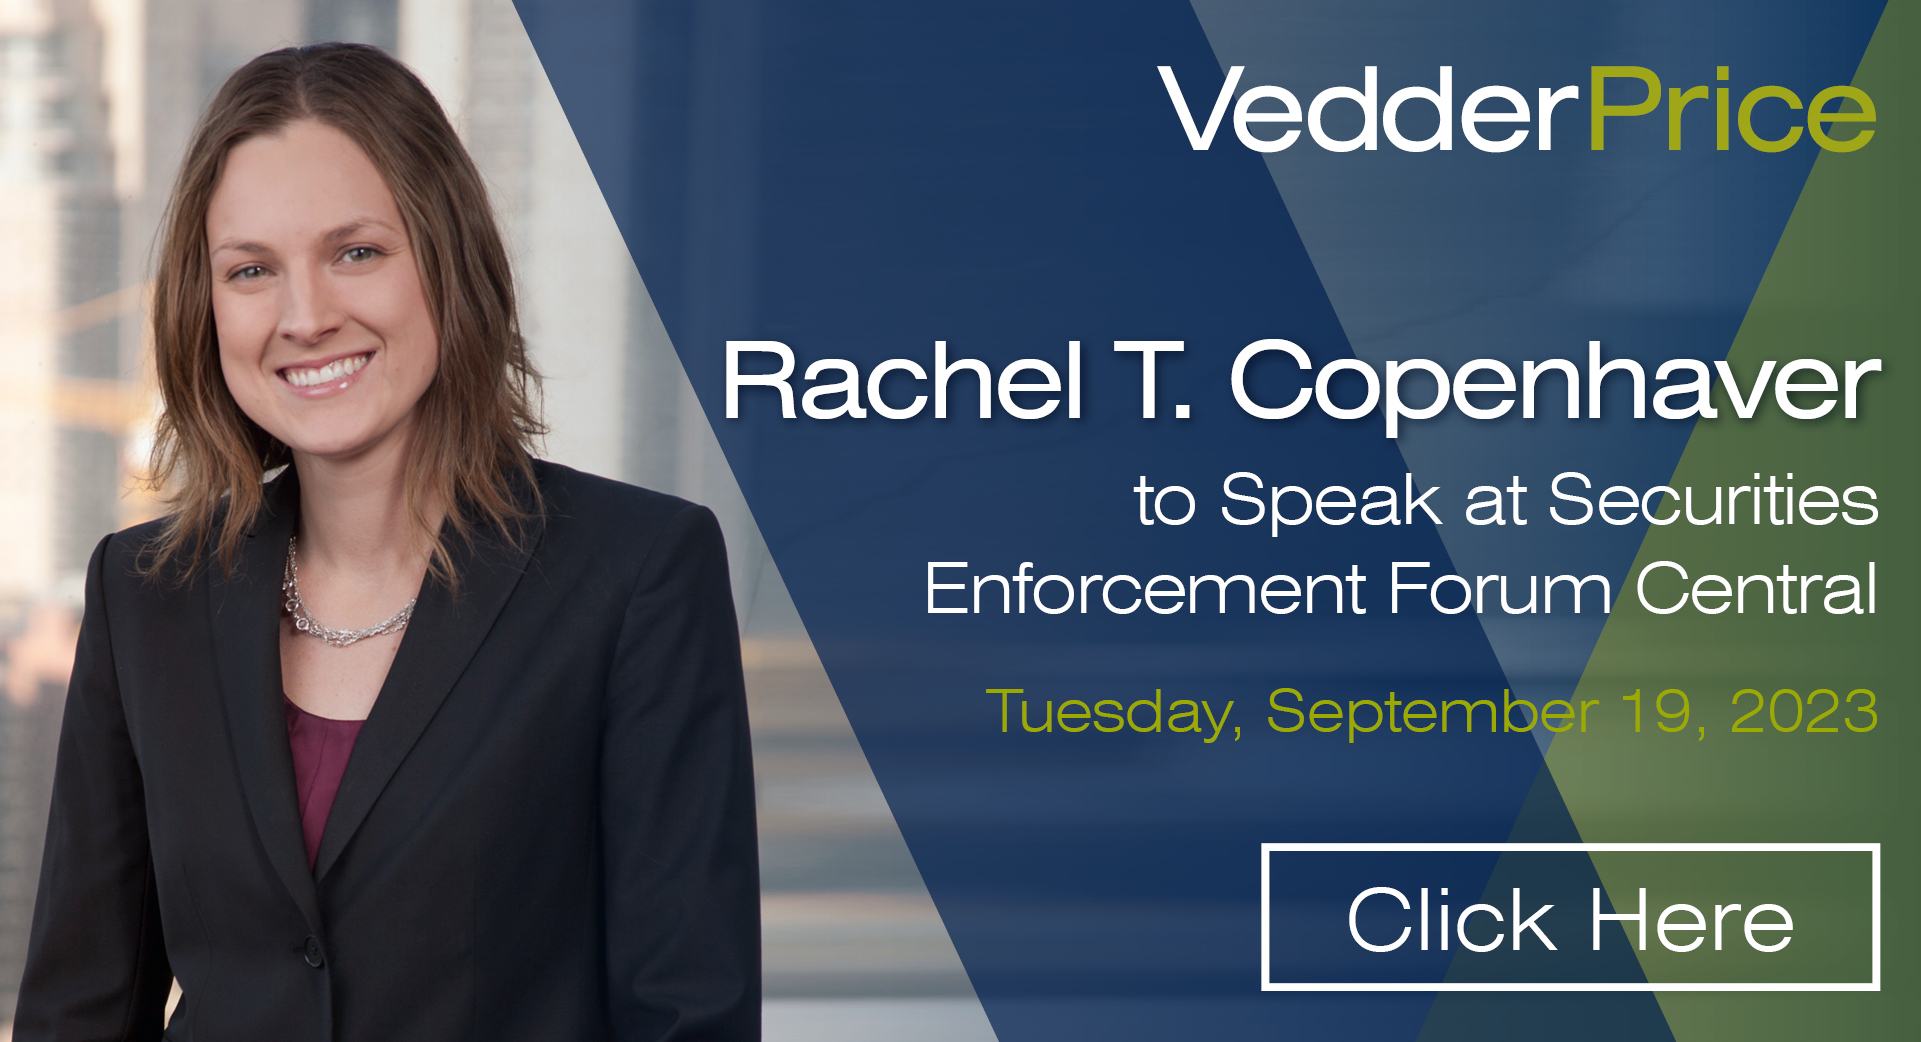 Rachel T. Copenhaver to Speak at Securities Enforcement Forum Central